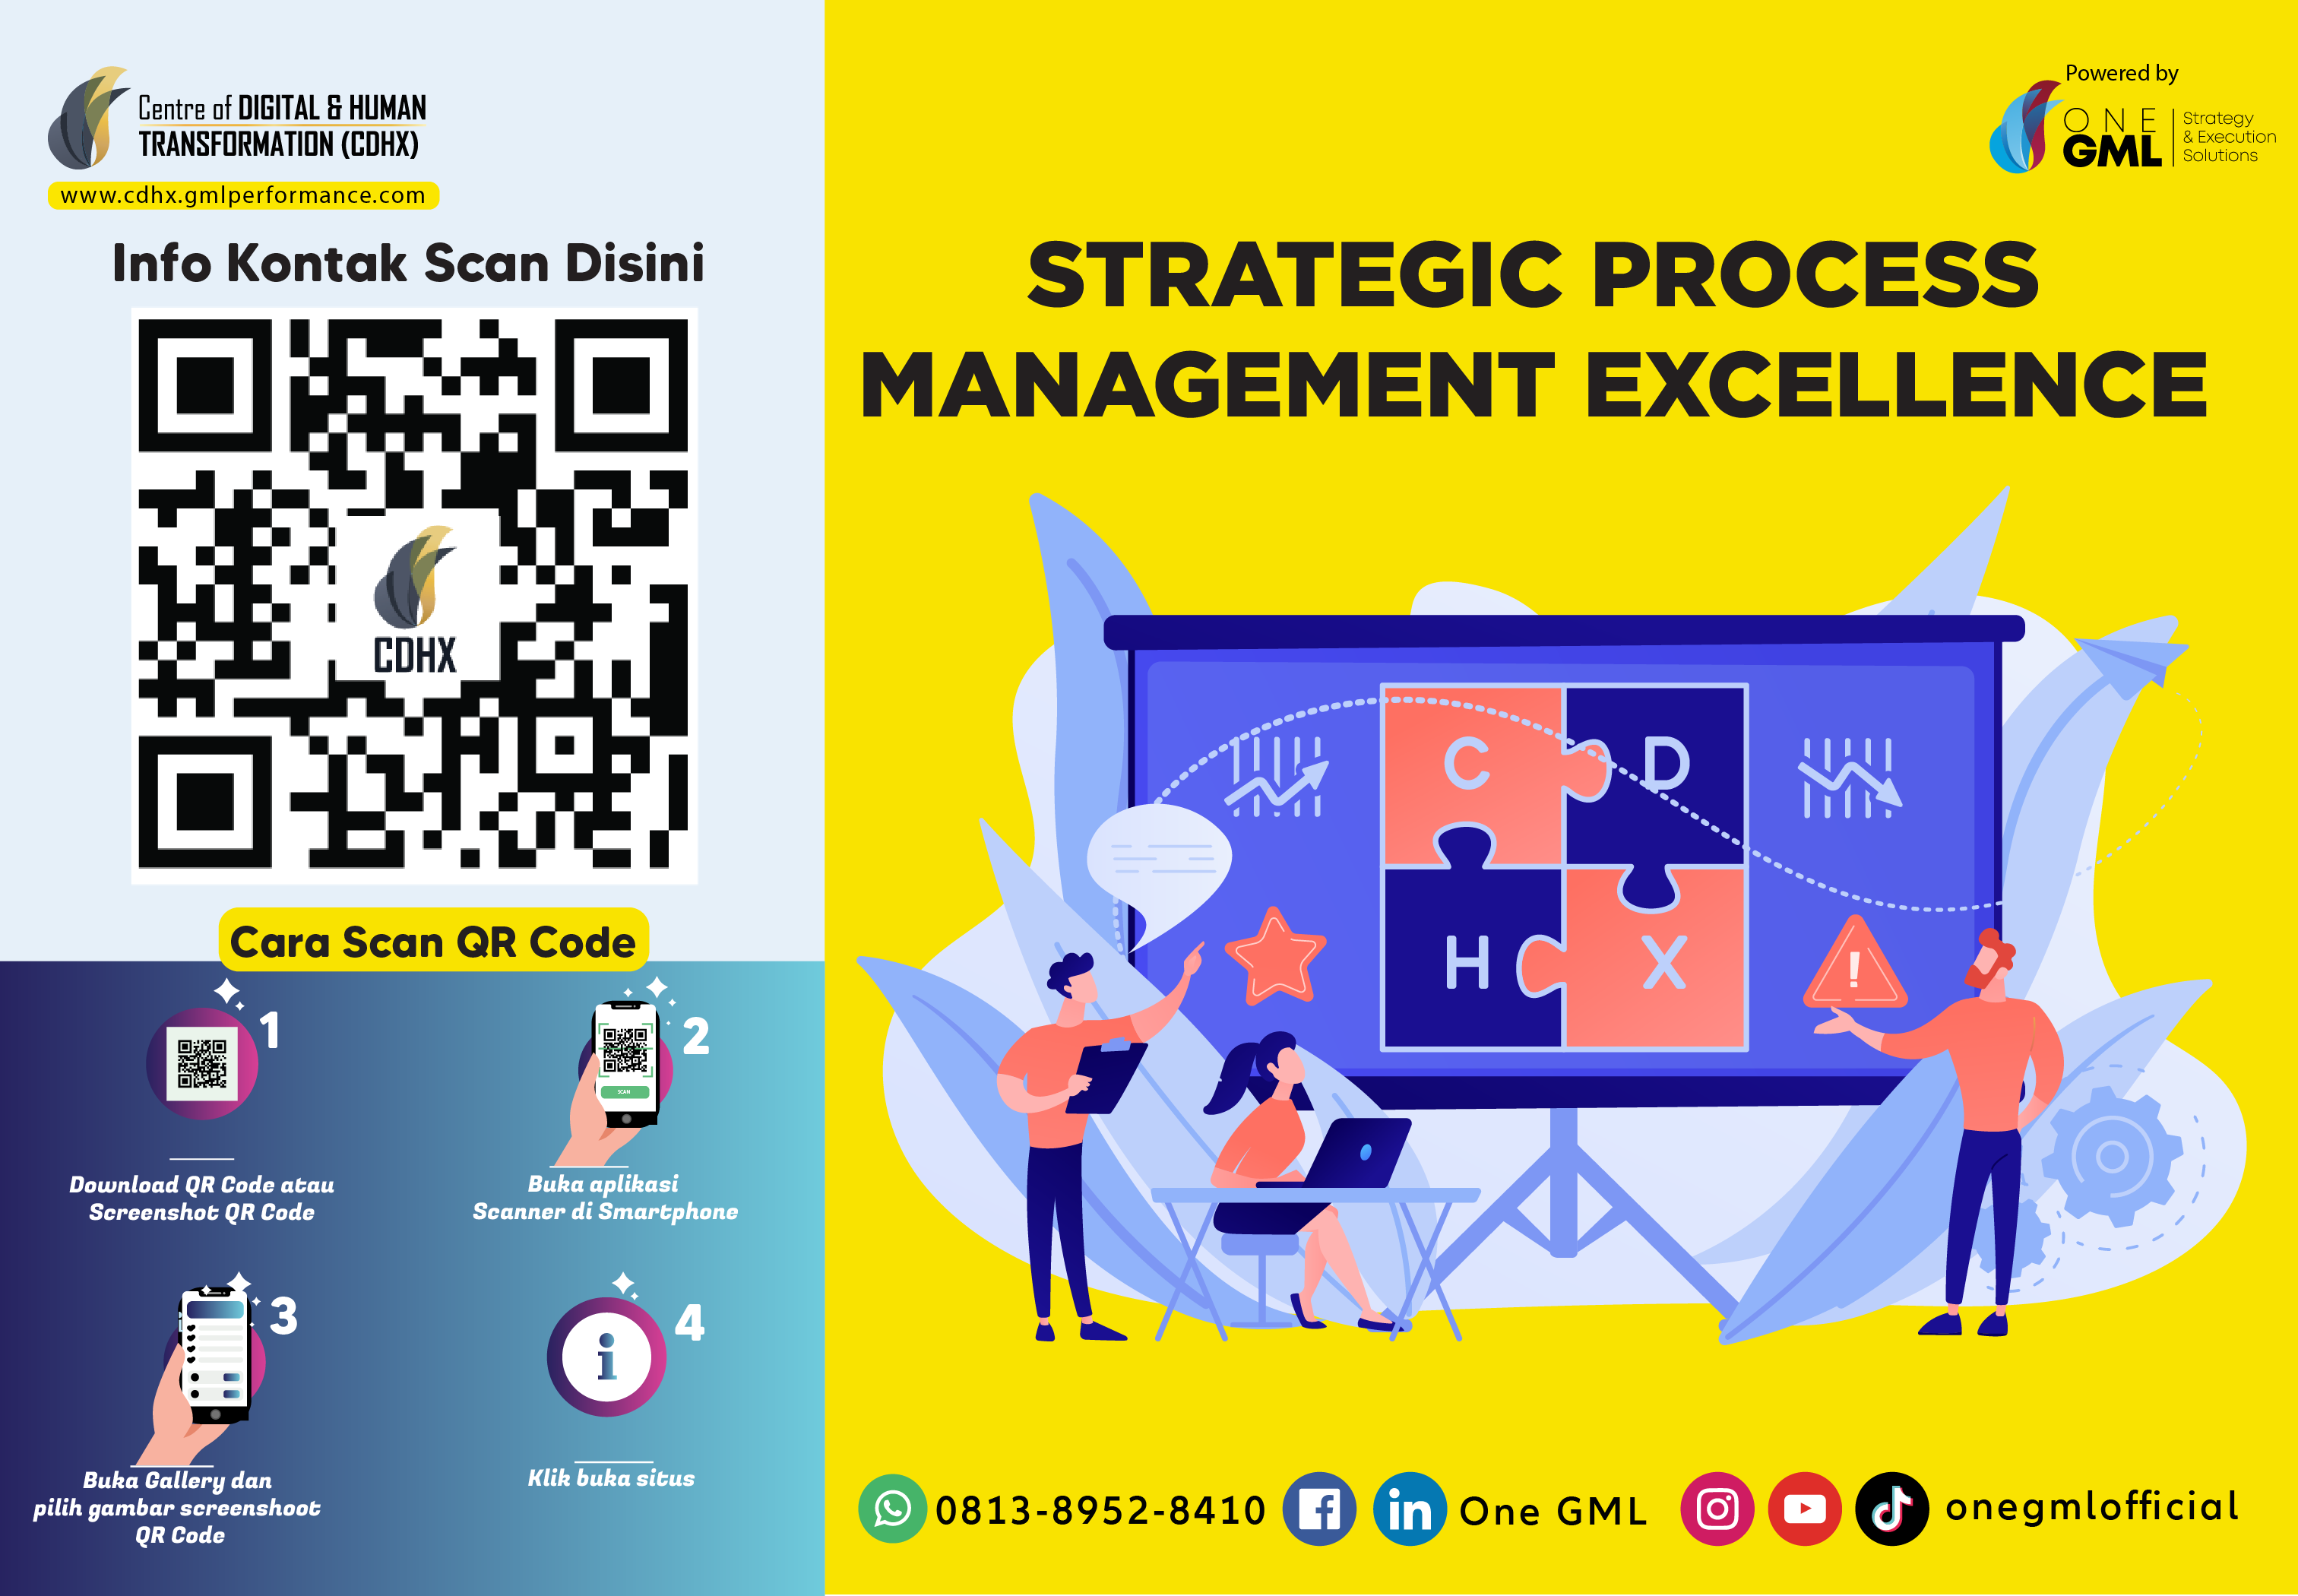 Strategic Process Management Excellence